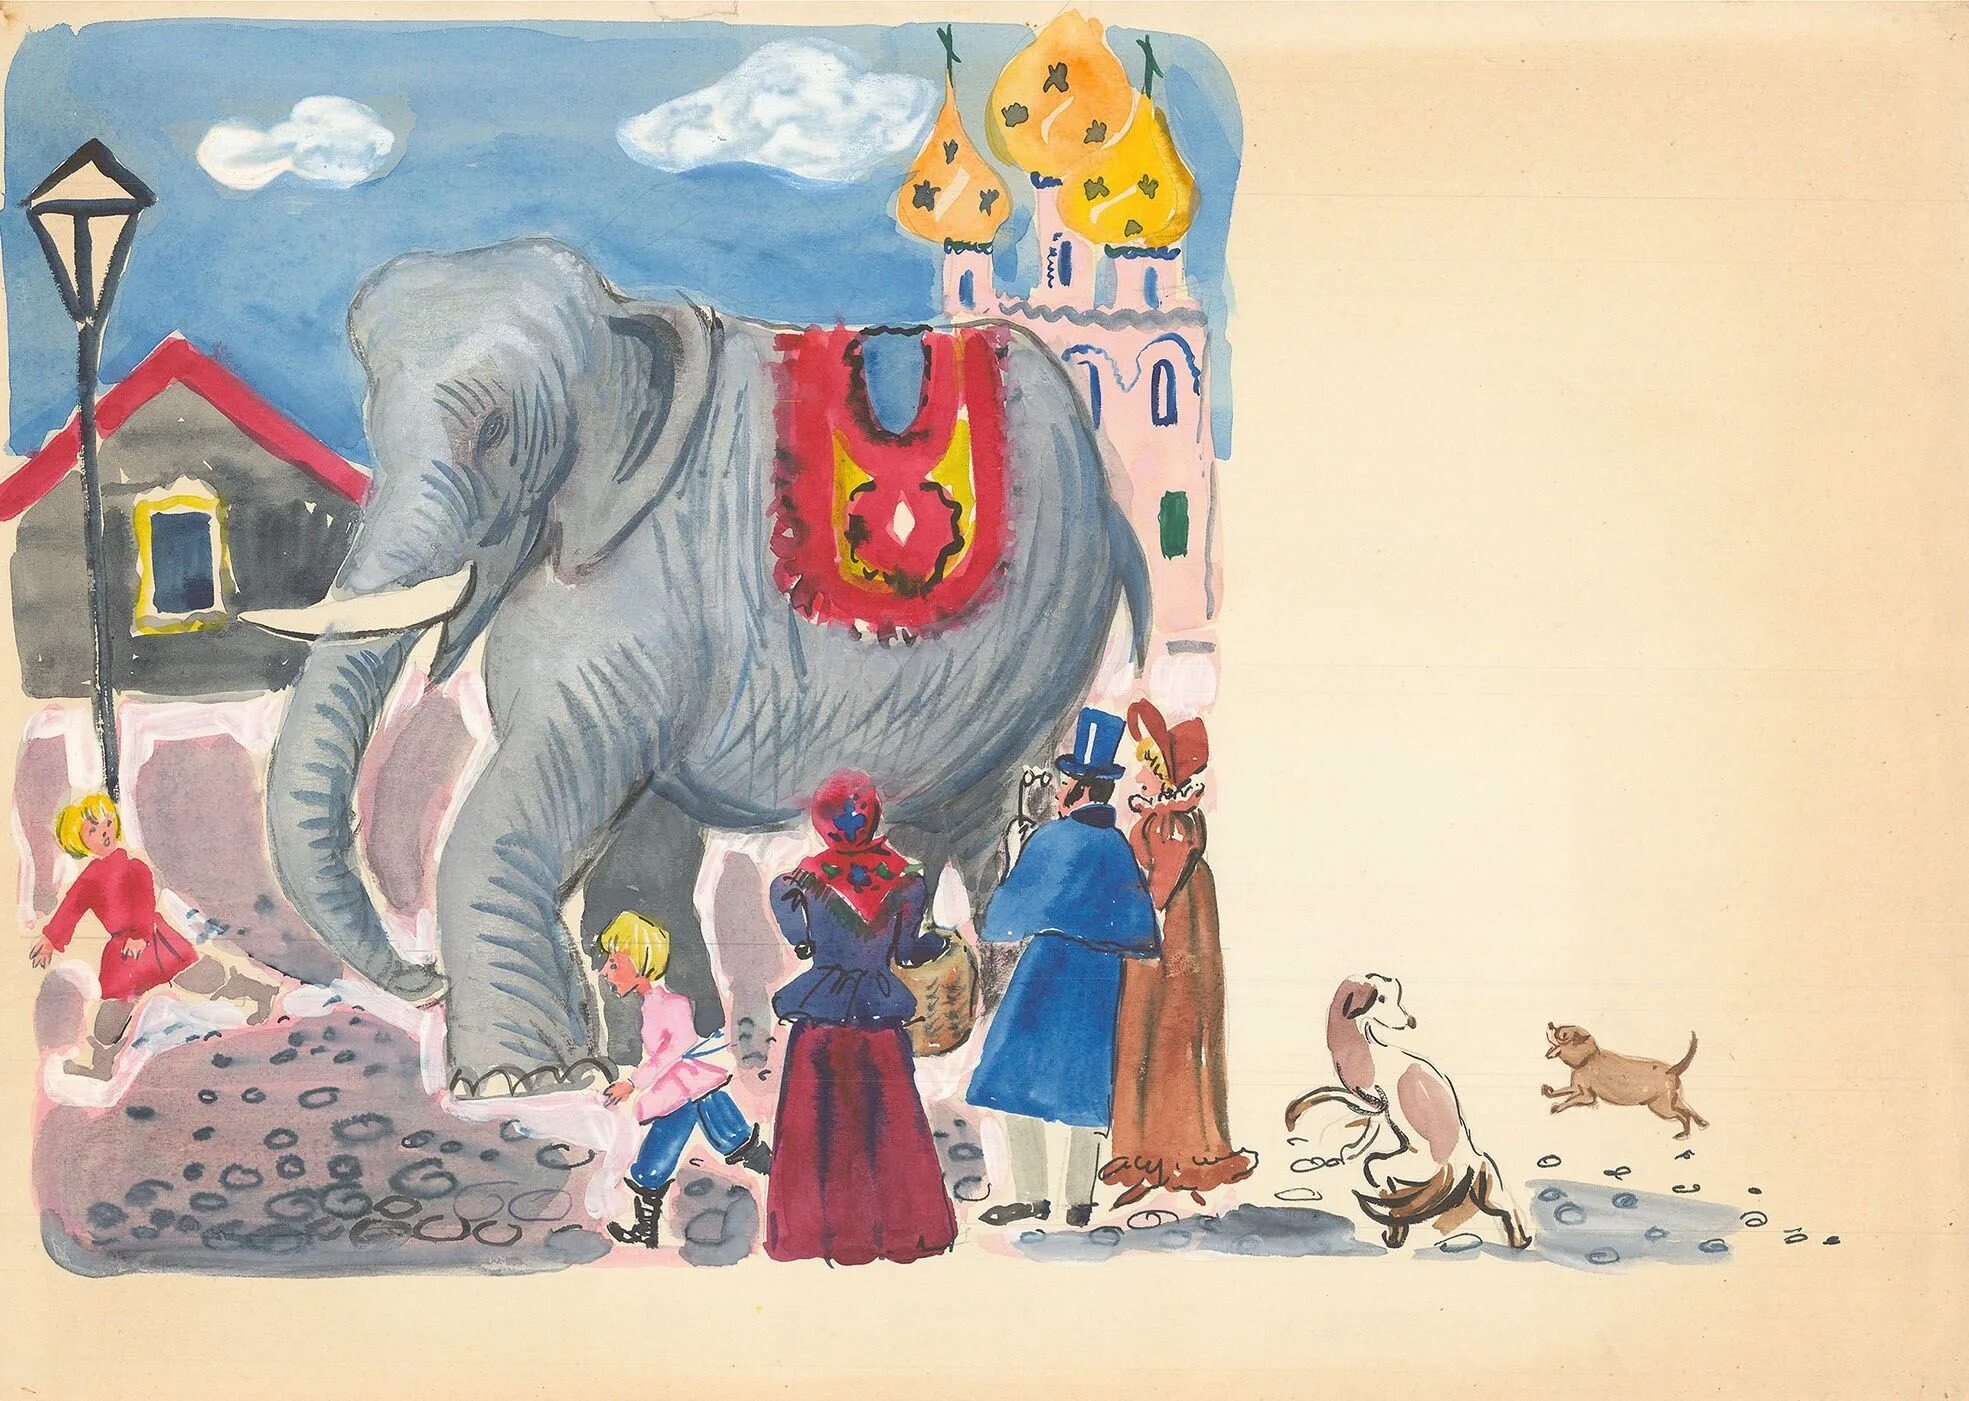 Слон и моська автор. Басня слон и моська Крылов. Иллюстрация к басне слон и моська. Рисунок к басне Крылова слон и моська.